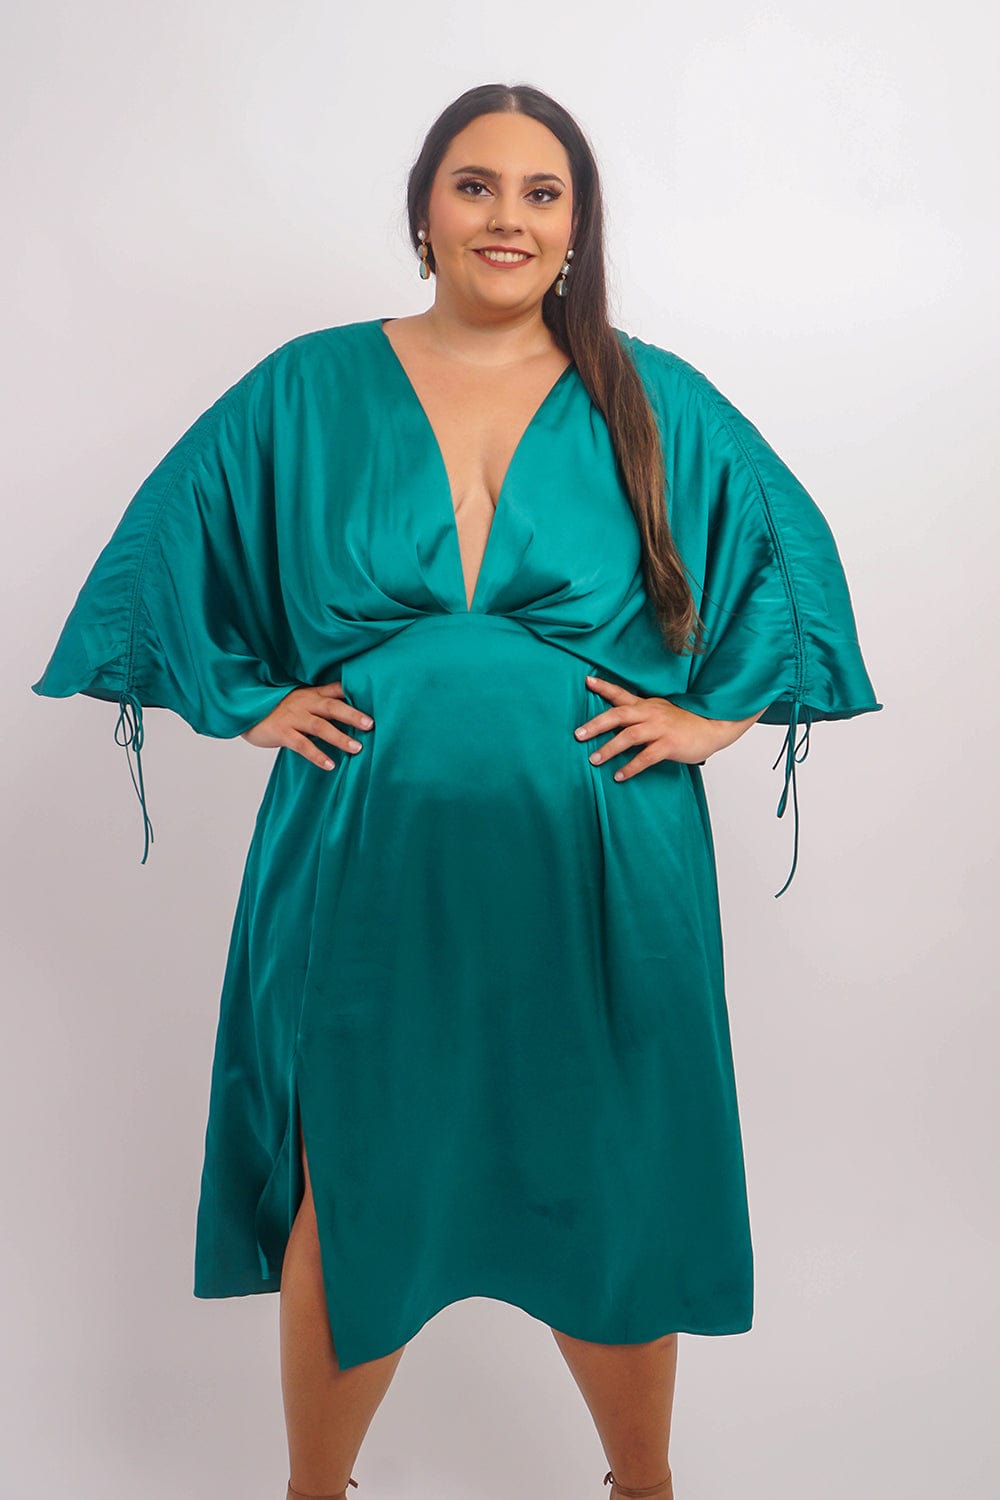 Chloe Dao DRESSES Hunter Green Satin Kasumi Midi Dress